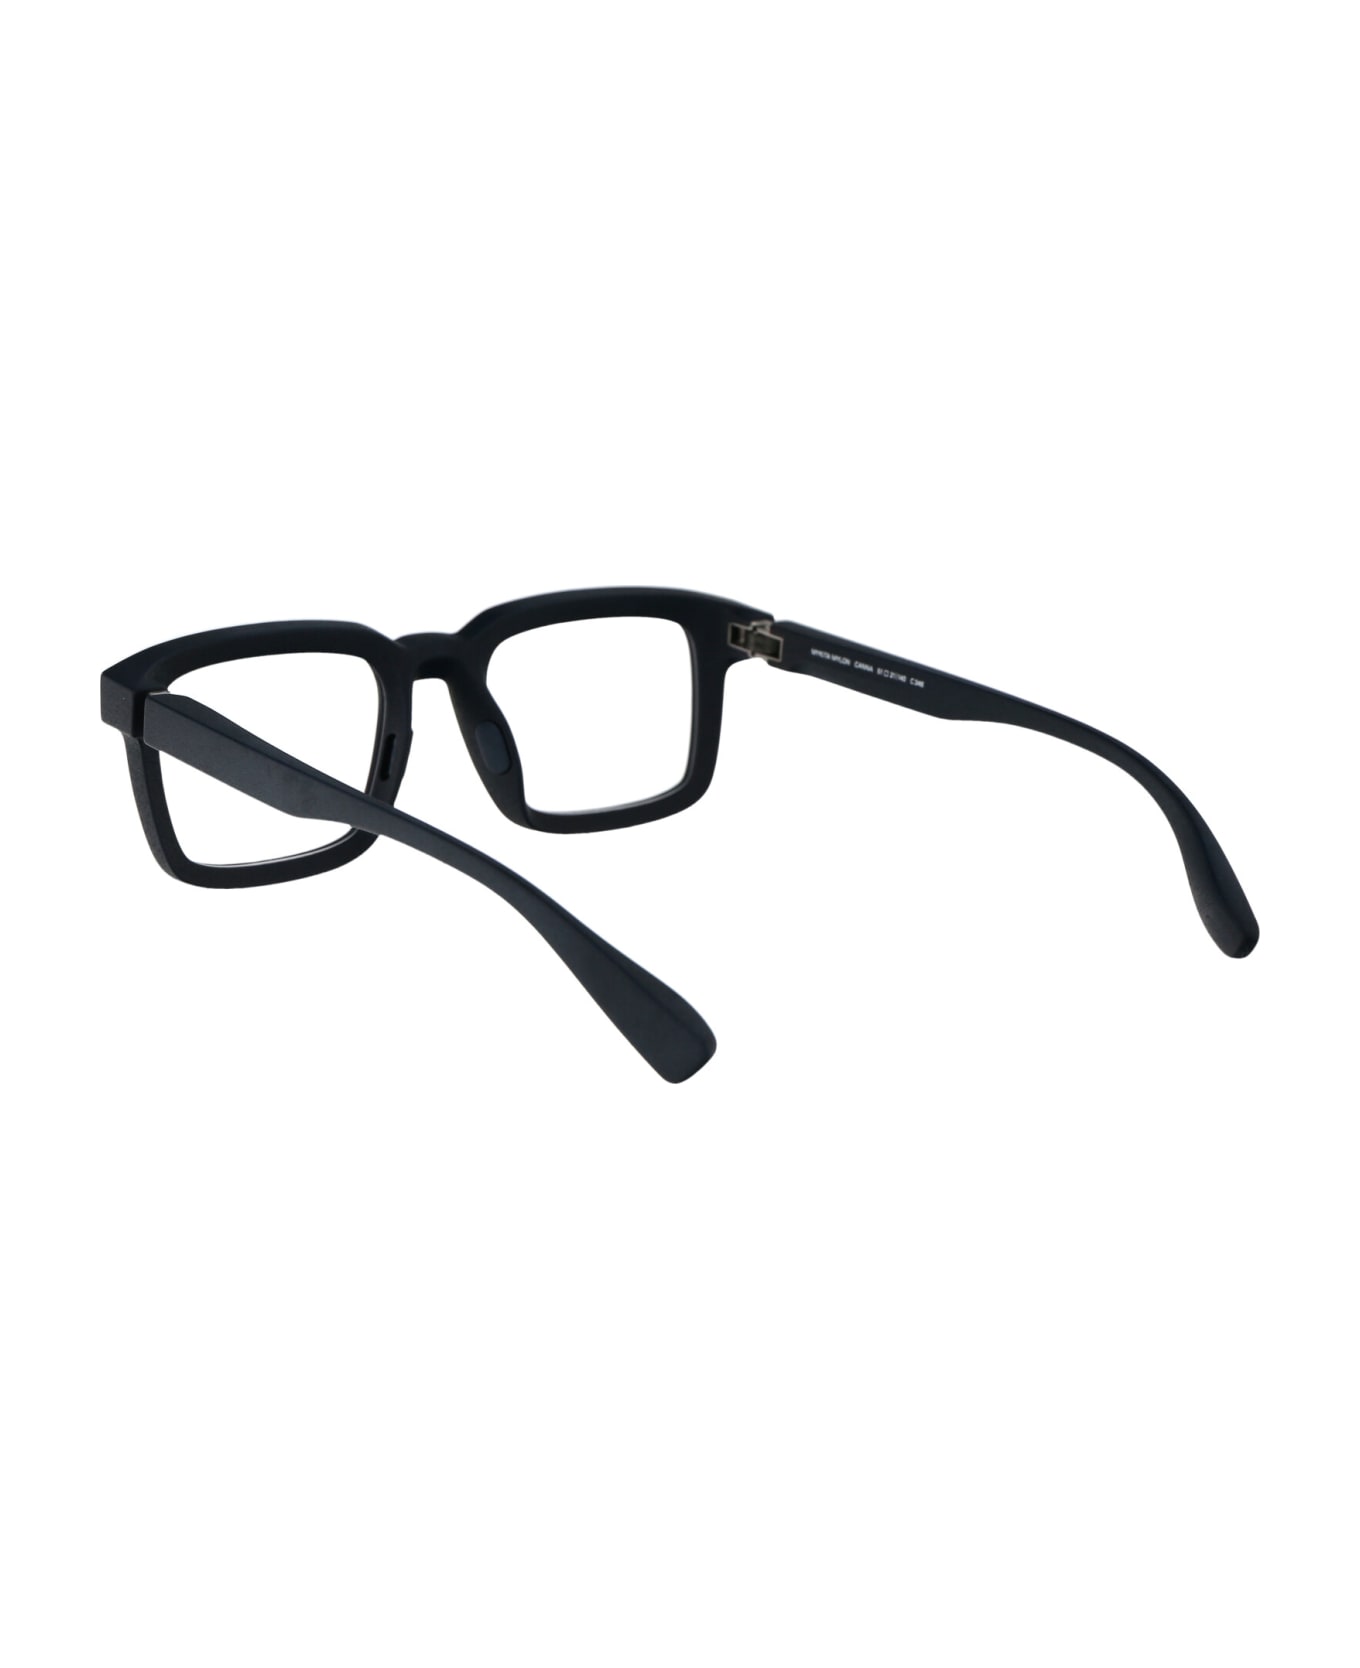 Mykita Canna Glasses - 346 MD34-Indigo Clear アイウェア